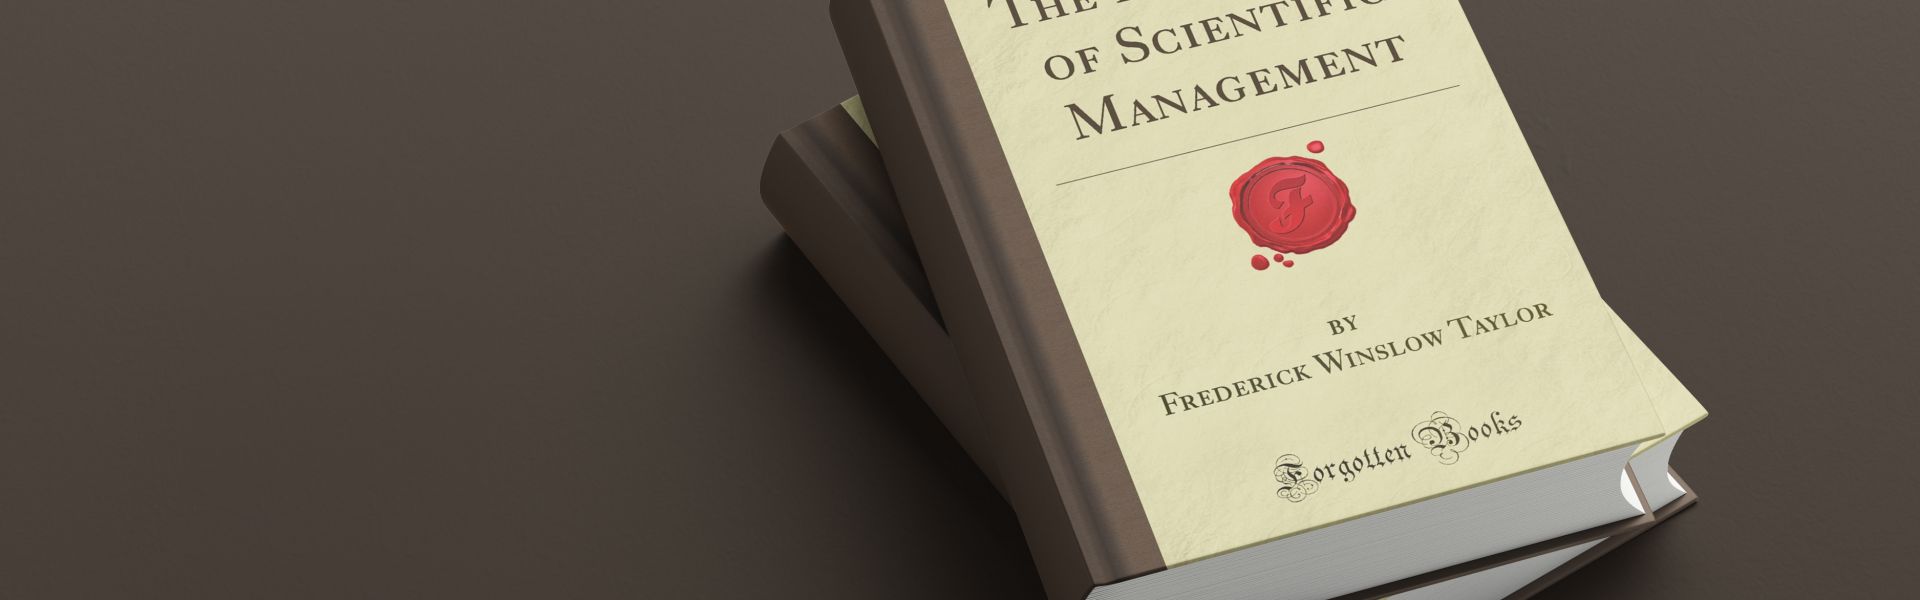 The principles of scientific management (samenvatting)